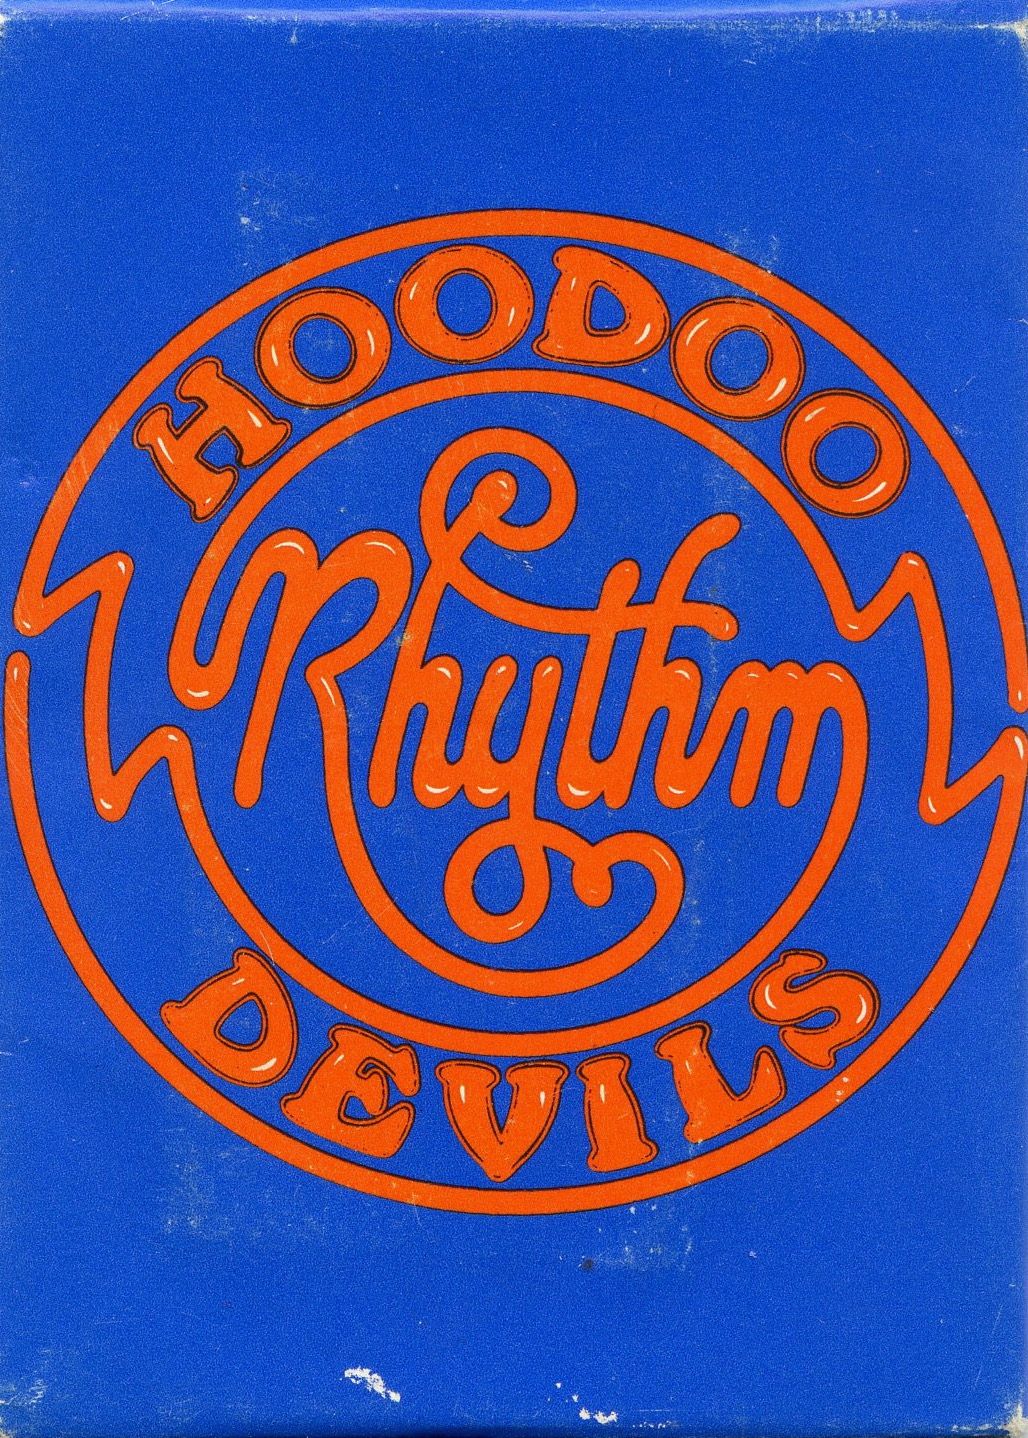 Rear Window The Best Of The Hoodoo Rhythm Devils Volume 1